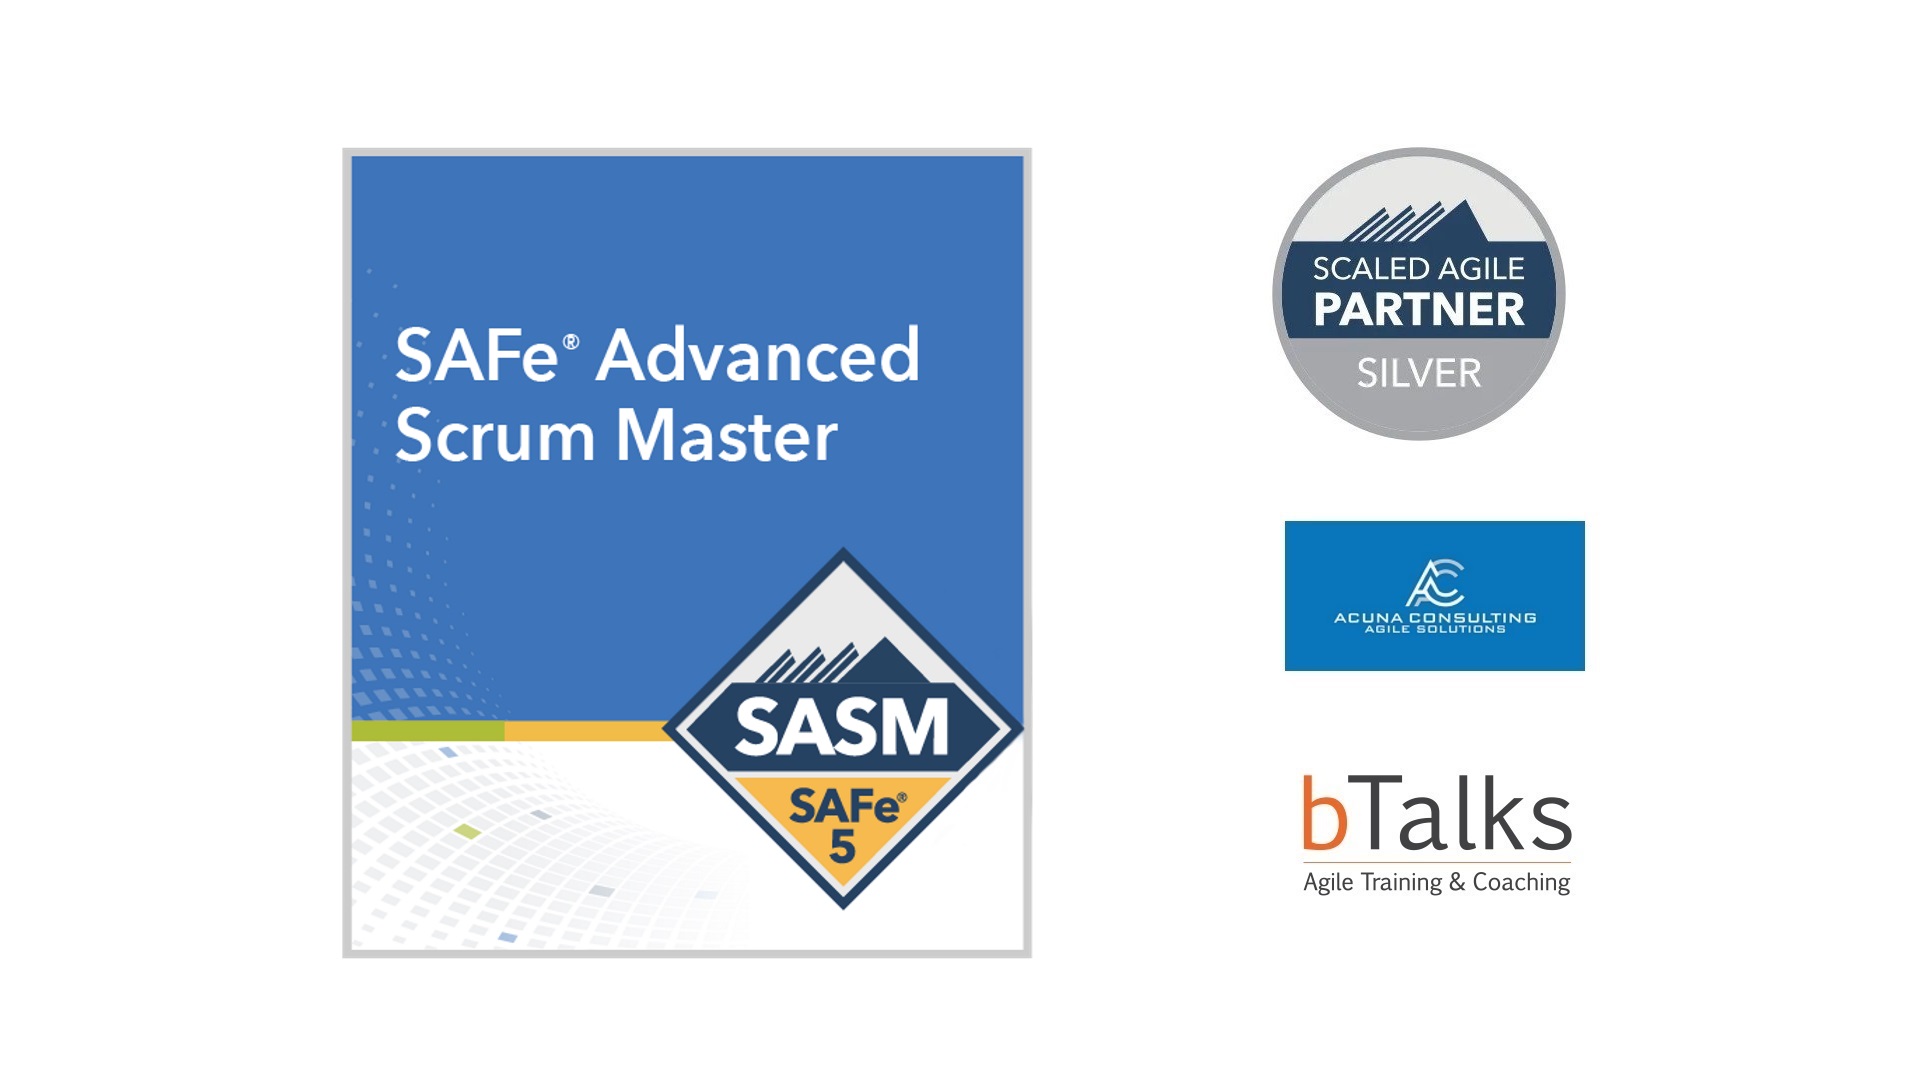 SAFe® Advanced Scrum Master 5.0